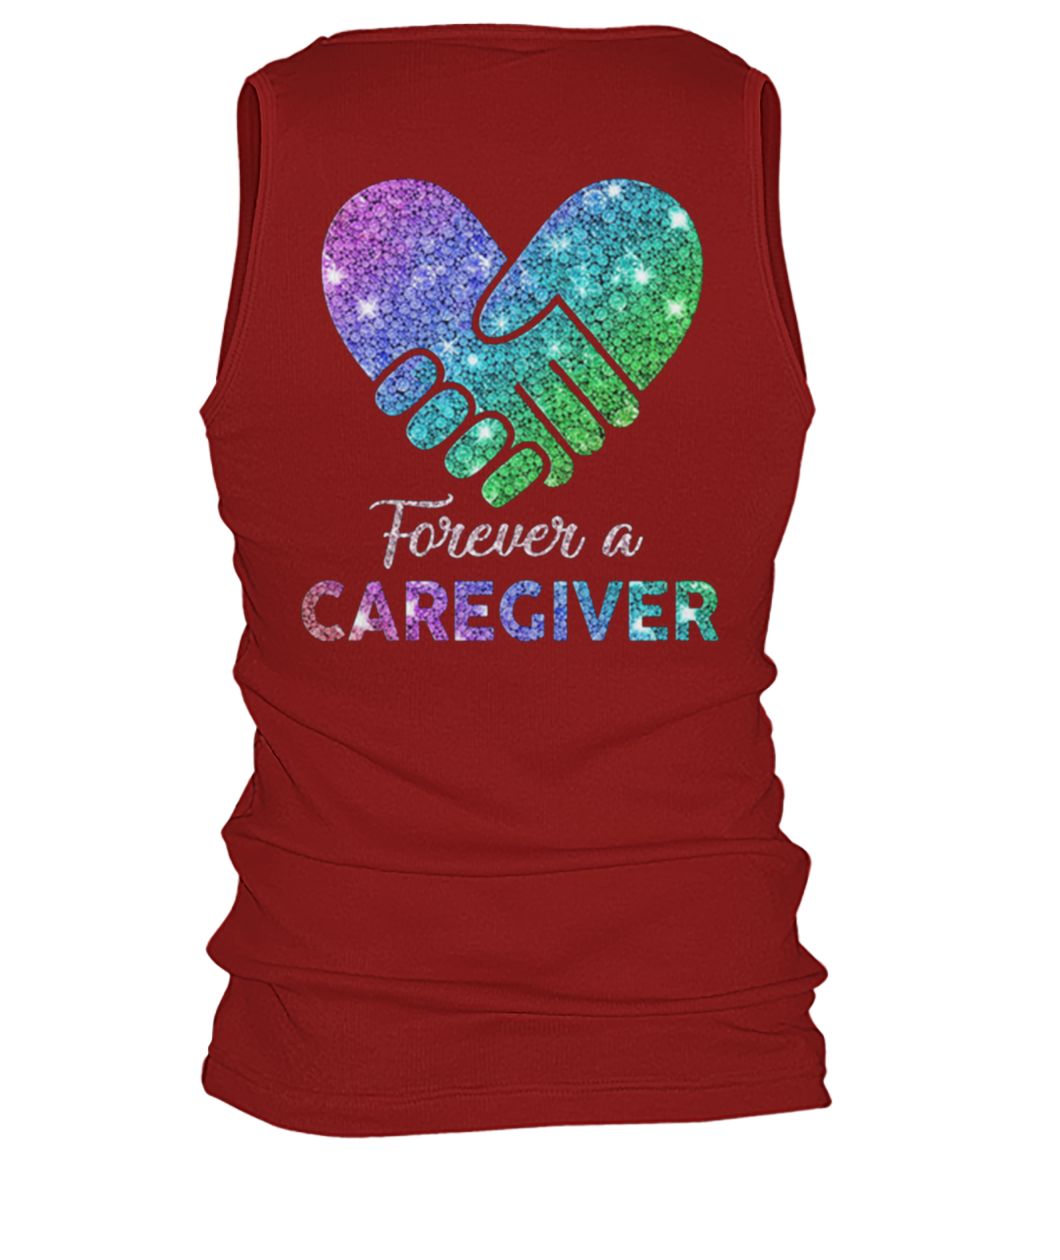 Forever a caregiver men's tank top